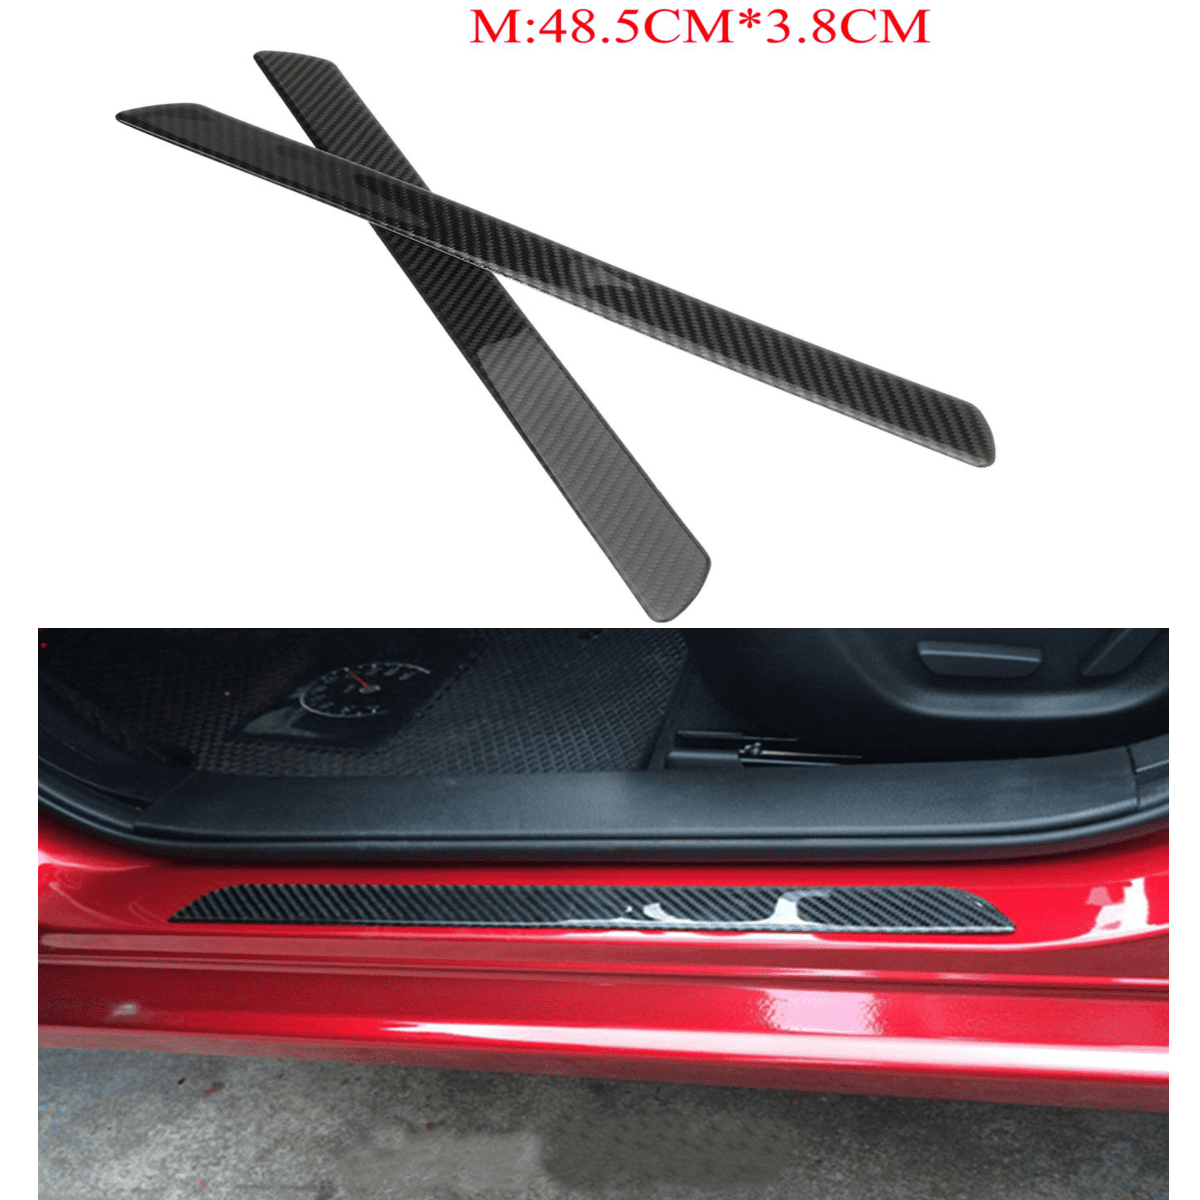 2x Carbon Fiber Car Auto Scuff Plate Door Sill Guard Cover Step Protector 49CM